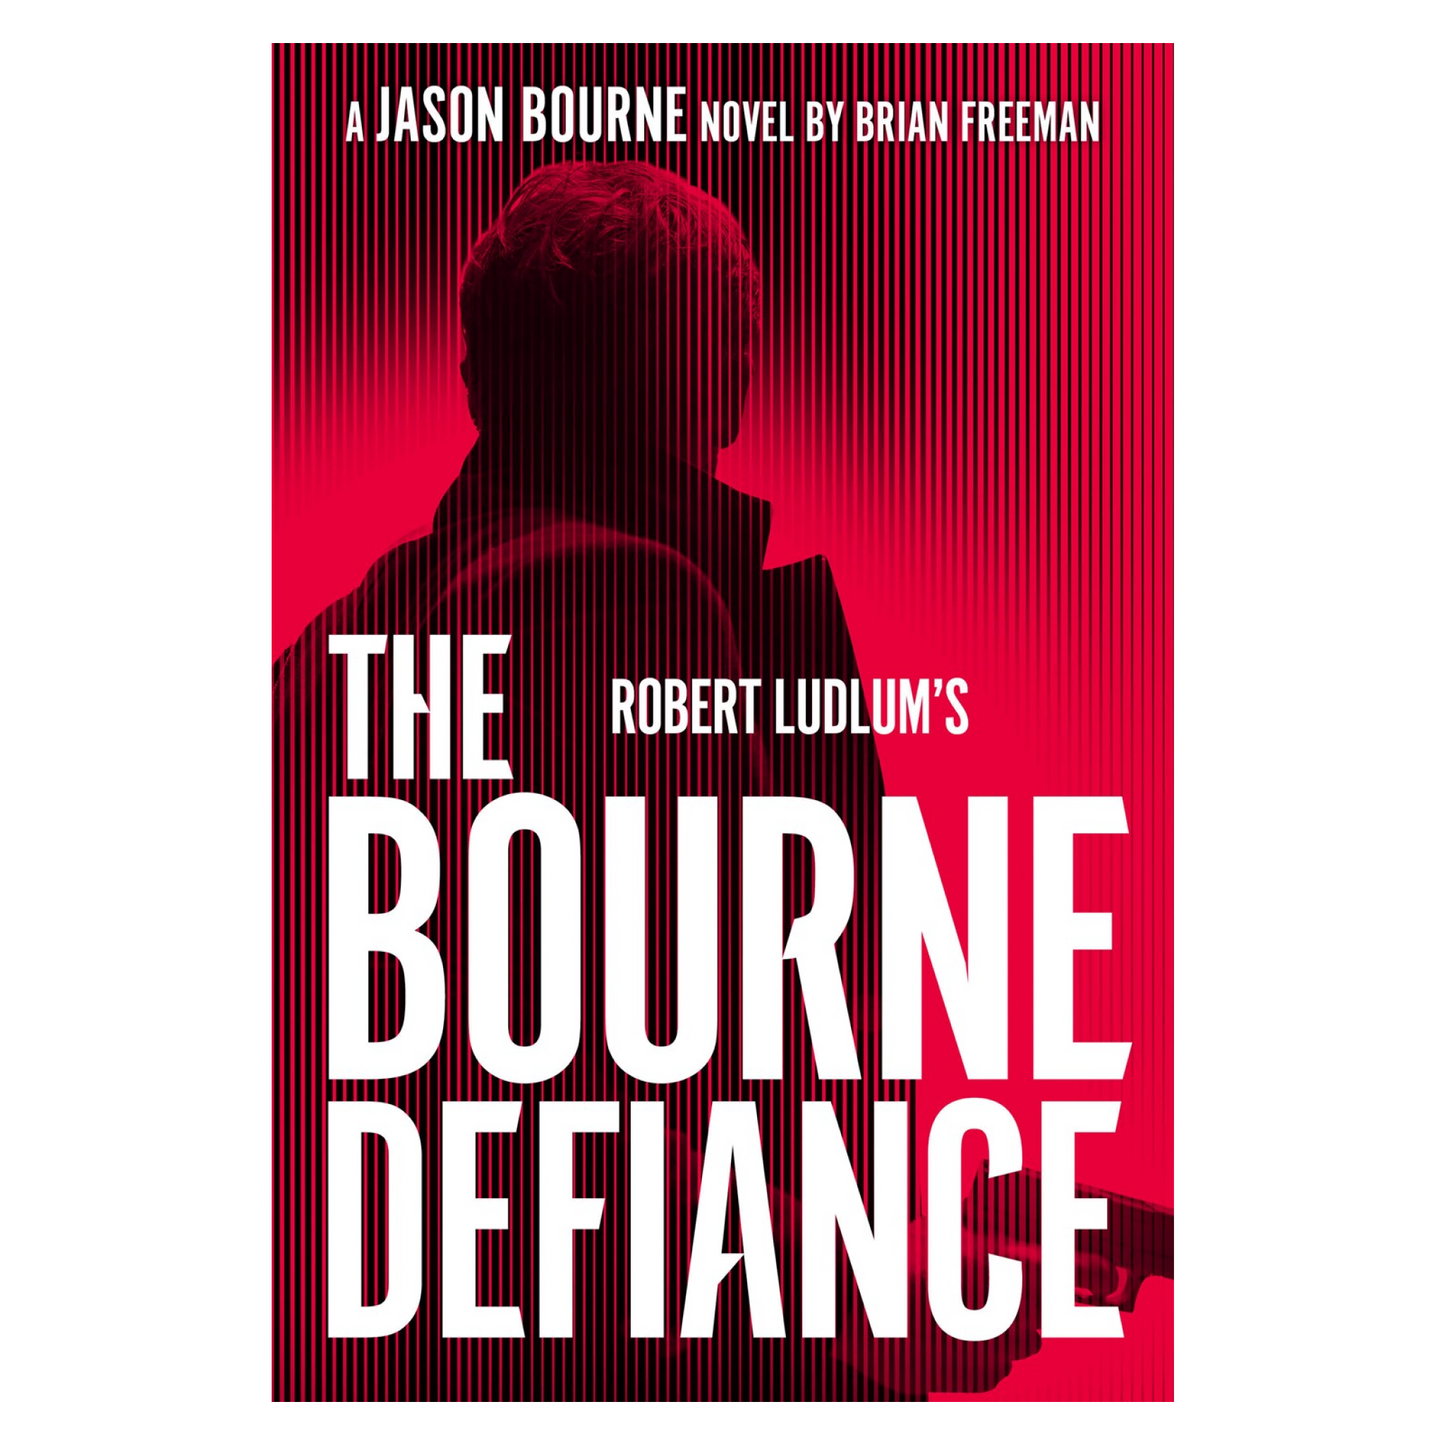 Robert Ludlum's The Bourne Defiance